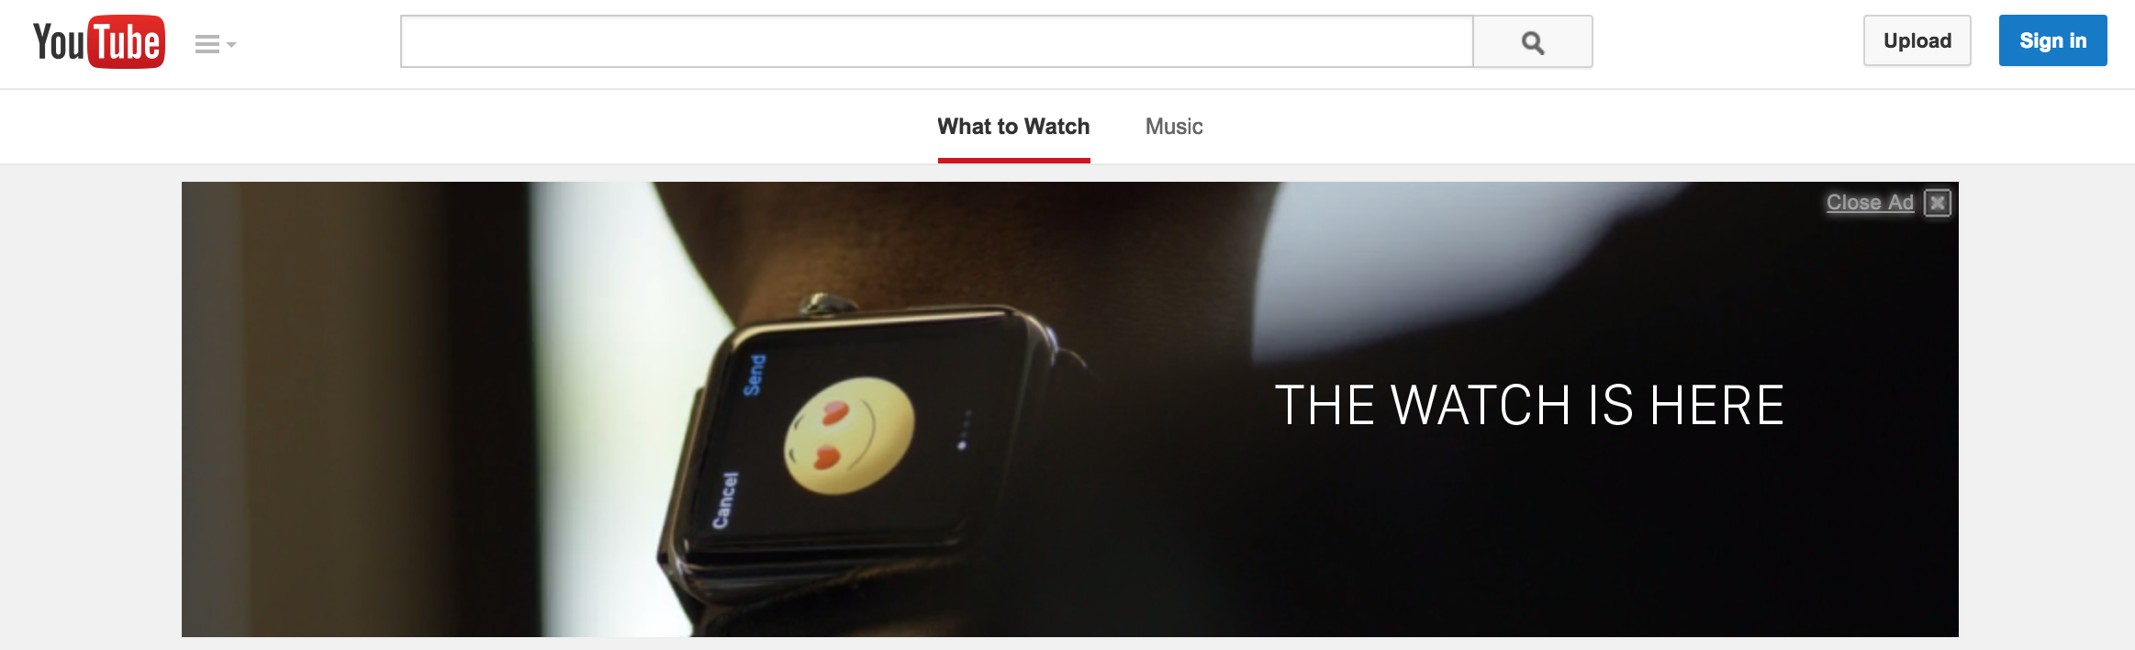 Apple Watch YouTube